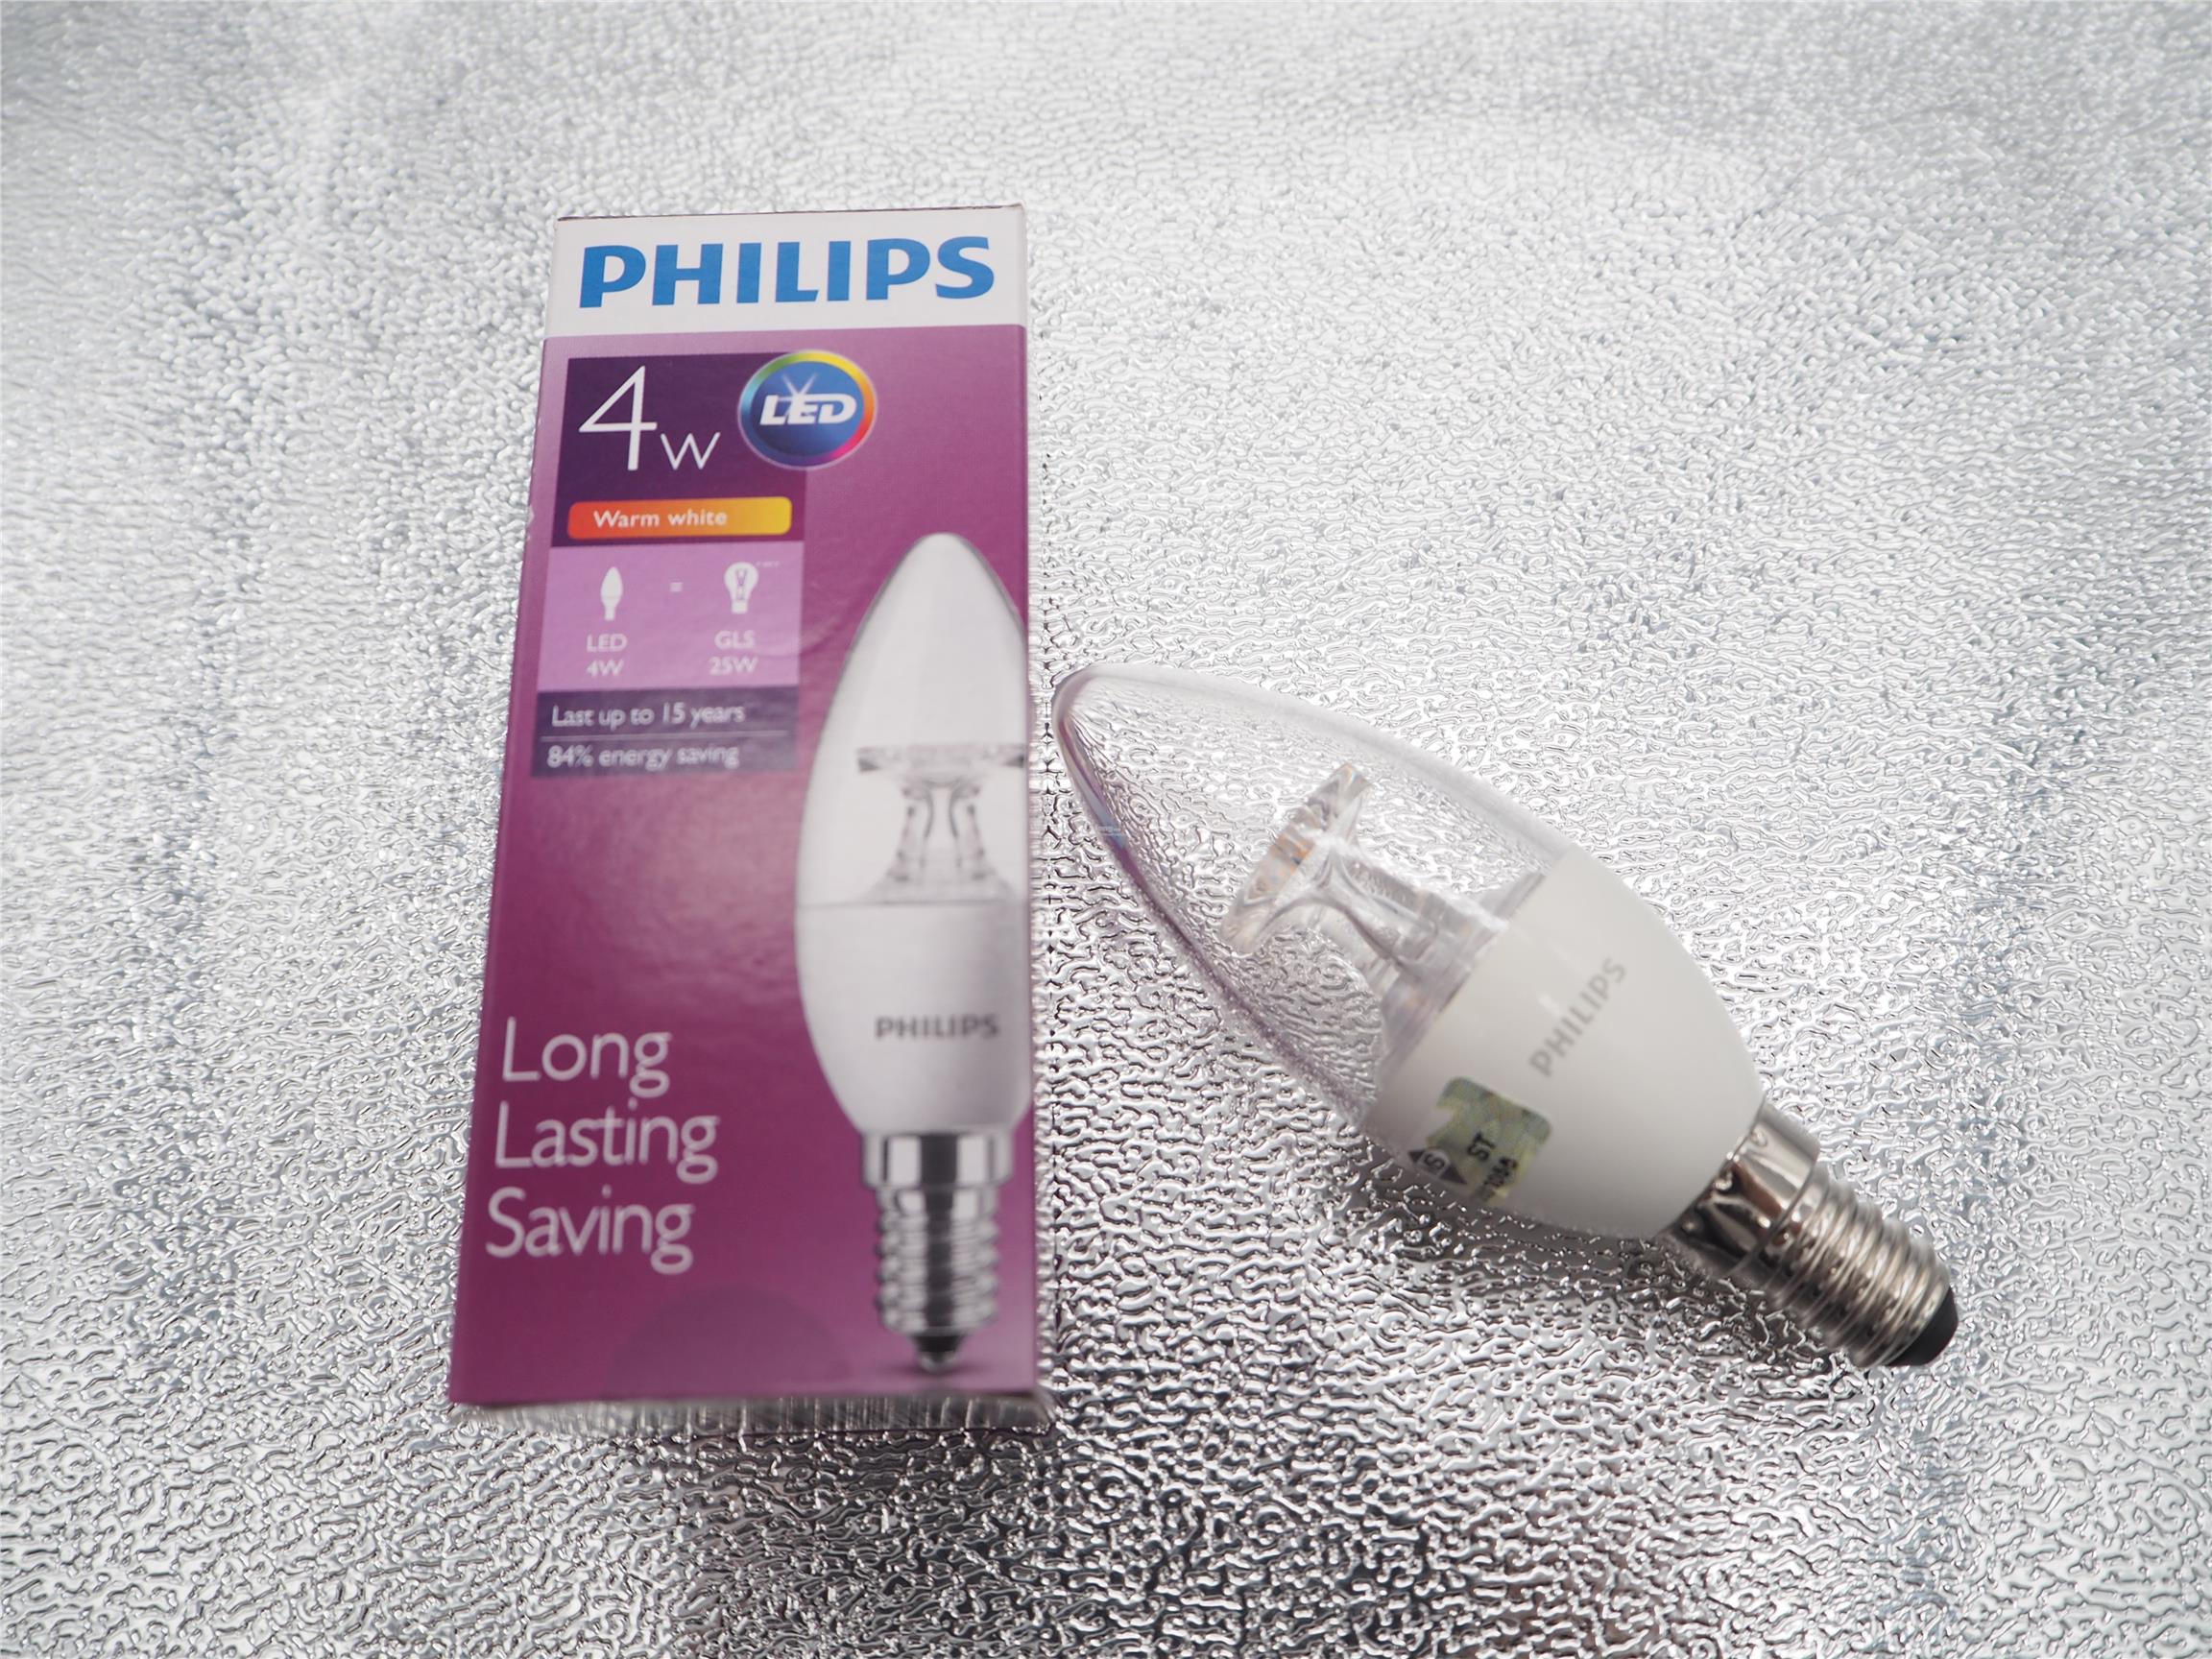 PHILIPS 4W LED CANDLE-WARM WHITE